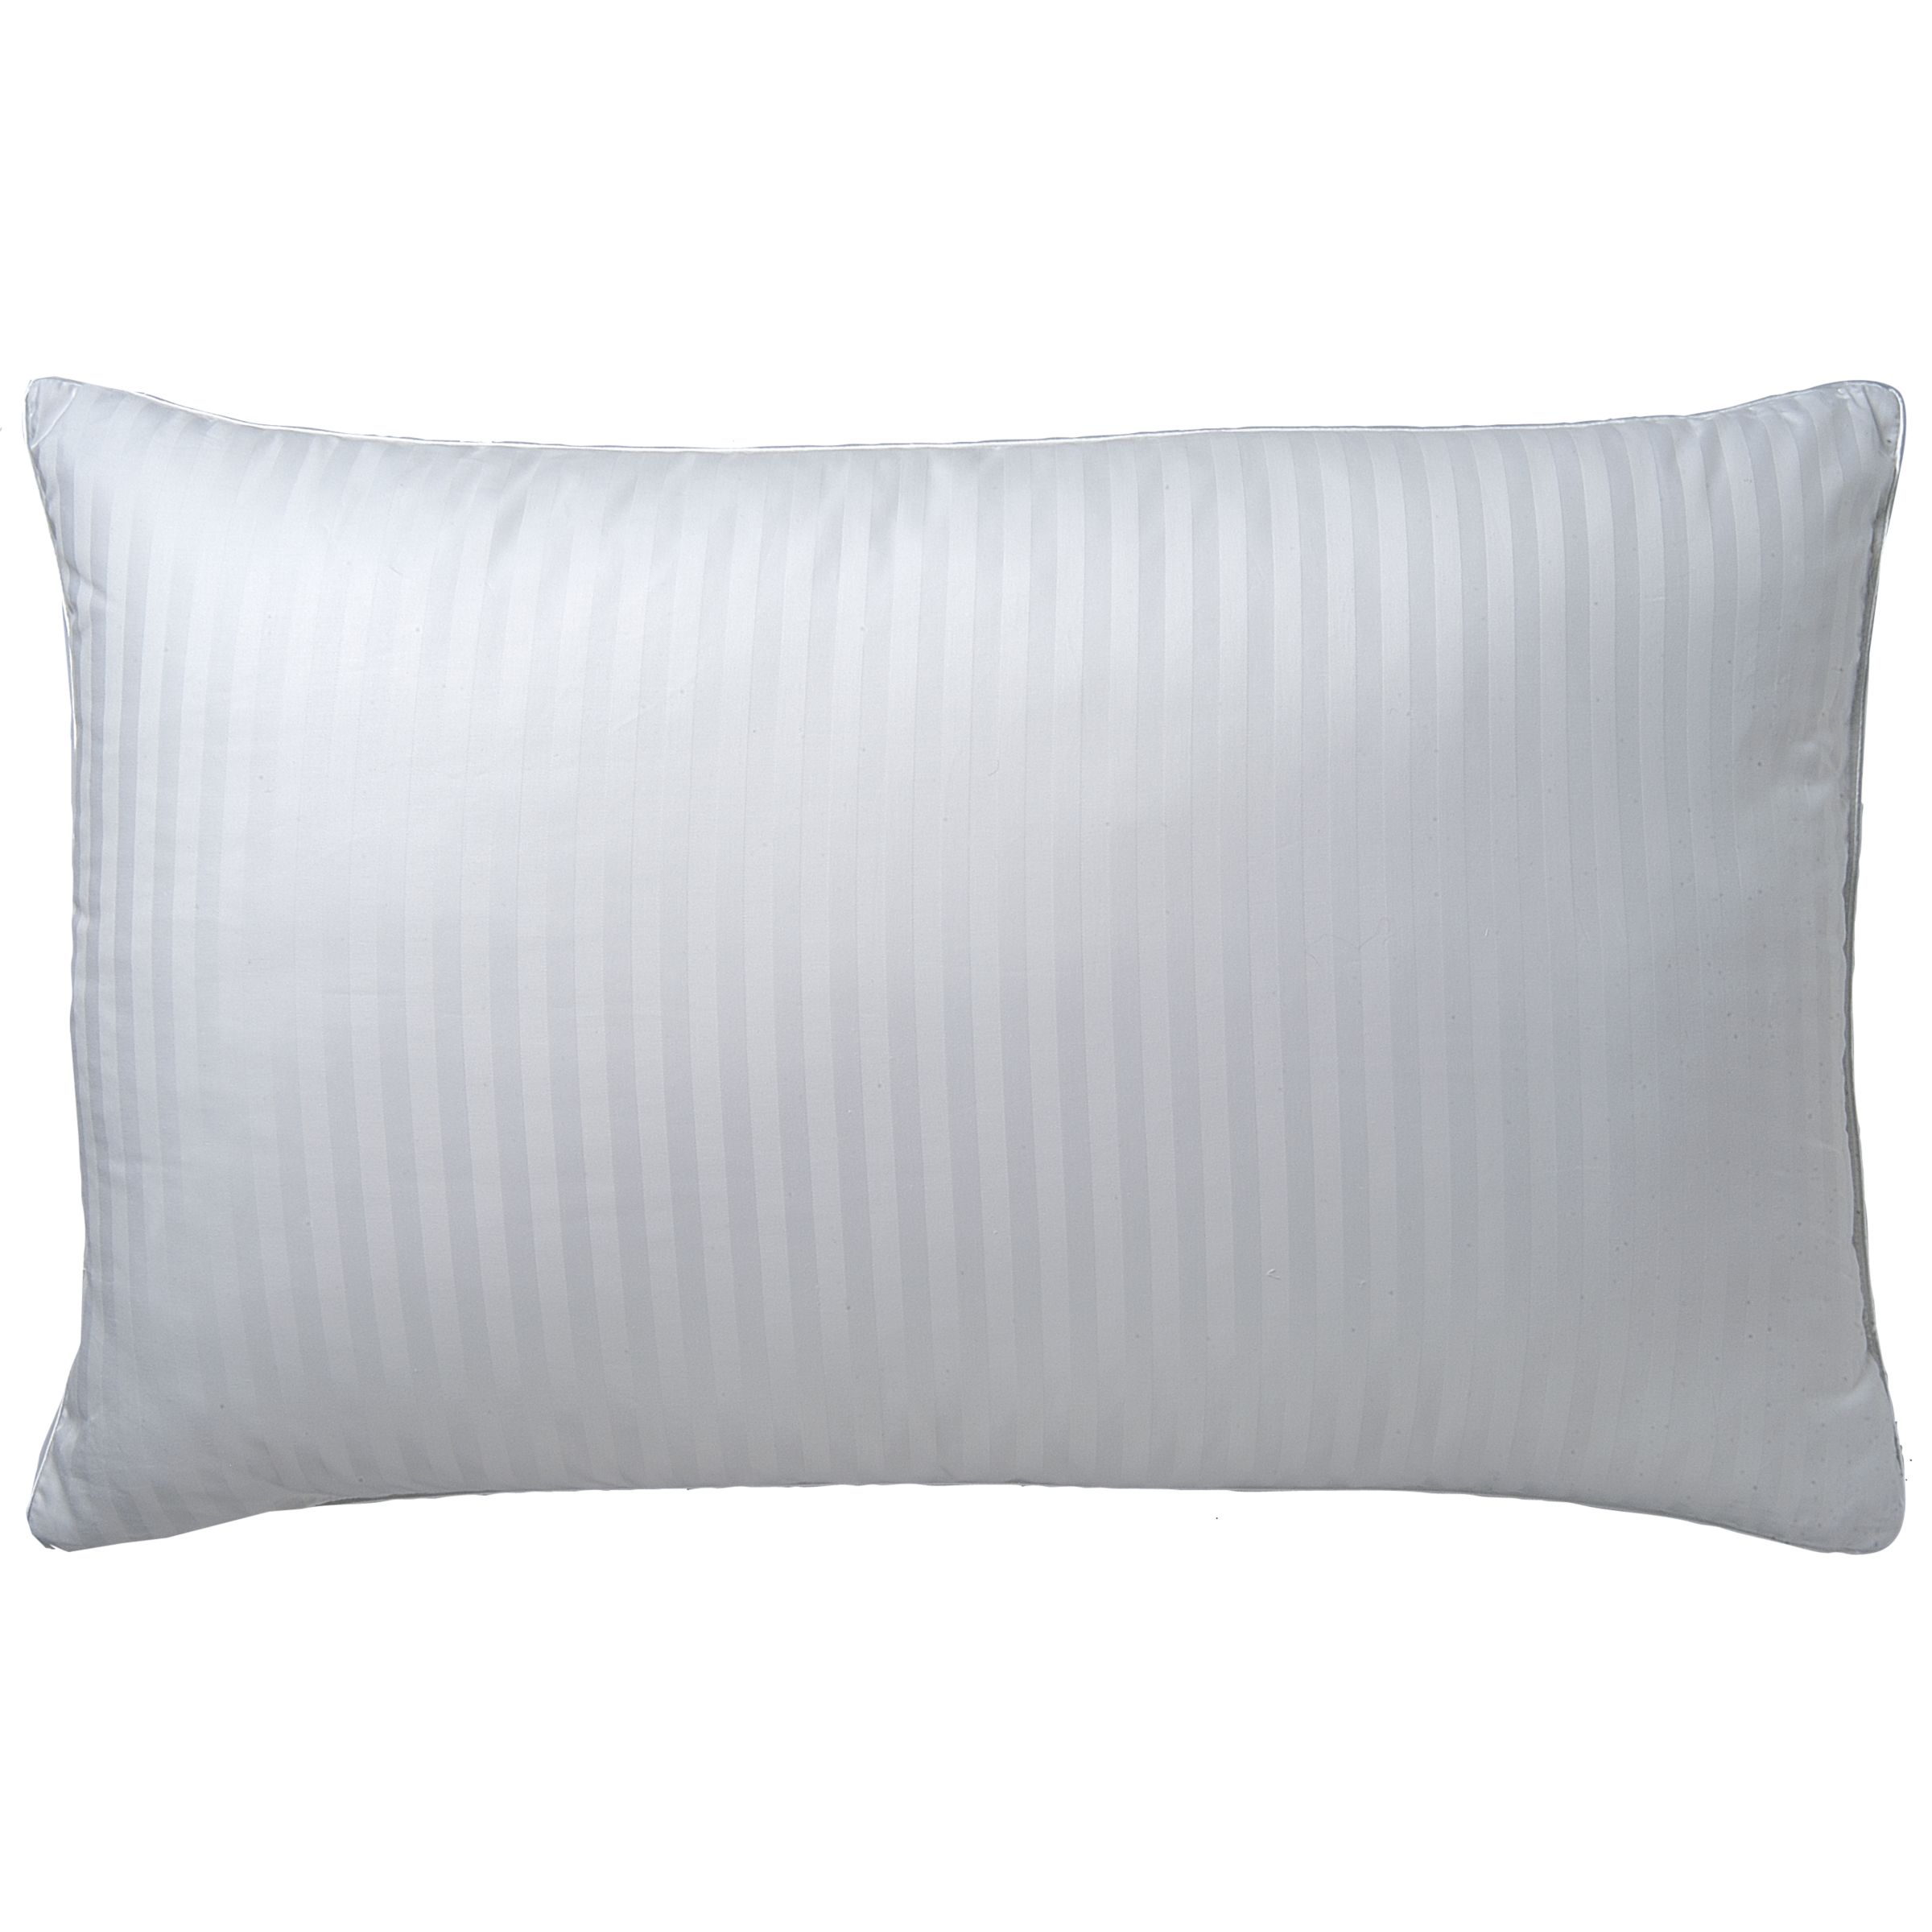 John Lewis Cluster Fibre Pillow